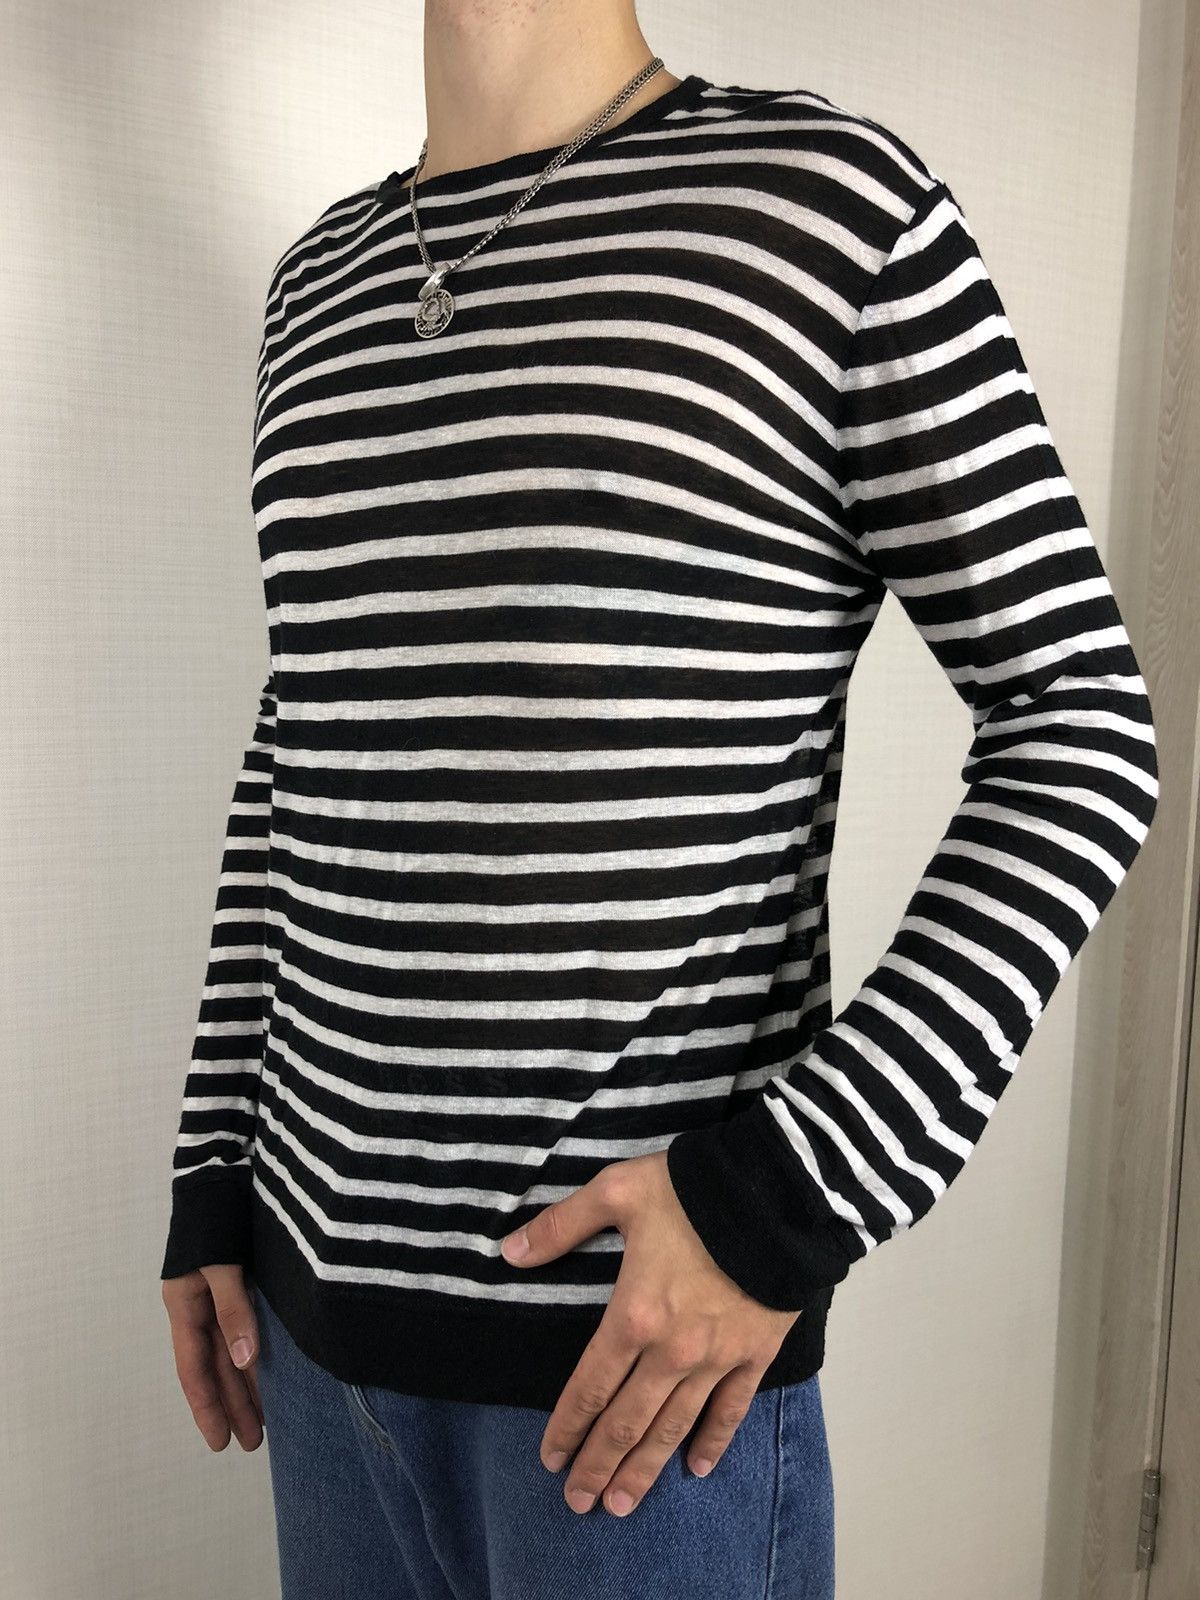 Rare T Alexander Wang Striped Sweater Long Sleeve ThIn Black Logo Size US M / EU 48-50 / 2 - 8 Preview